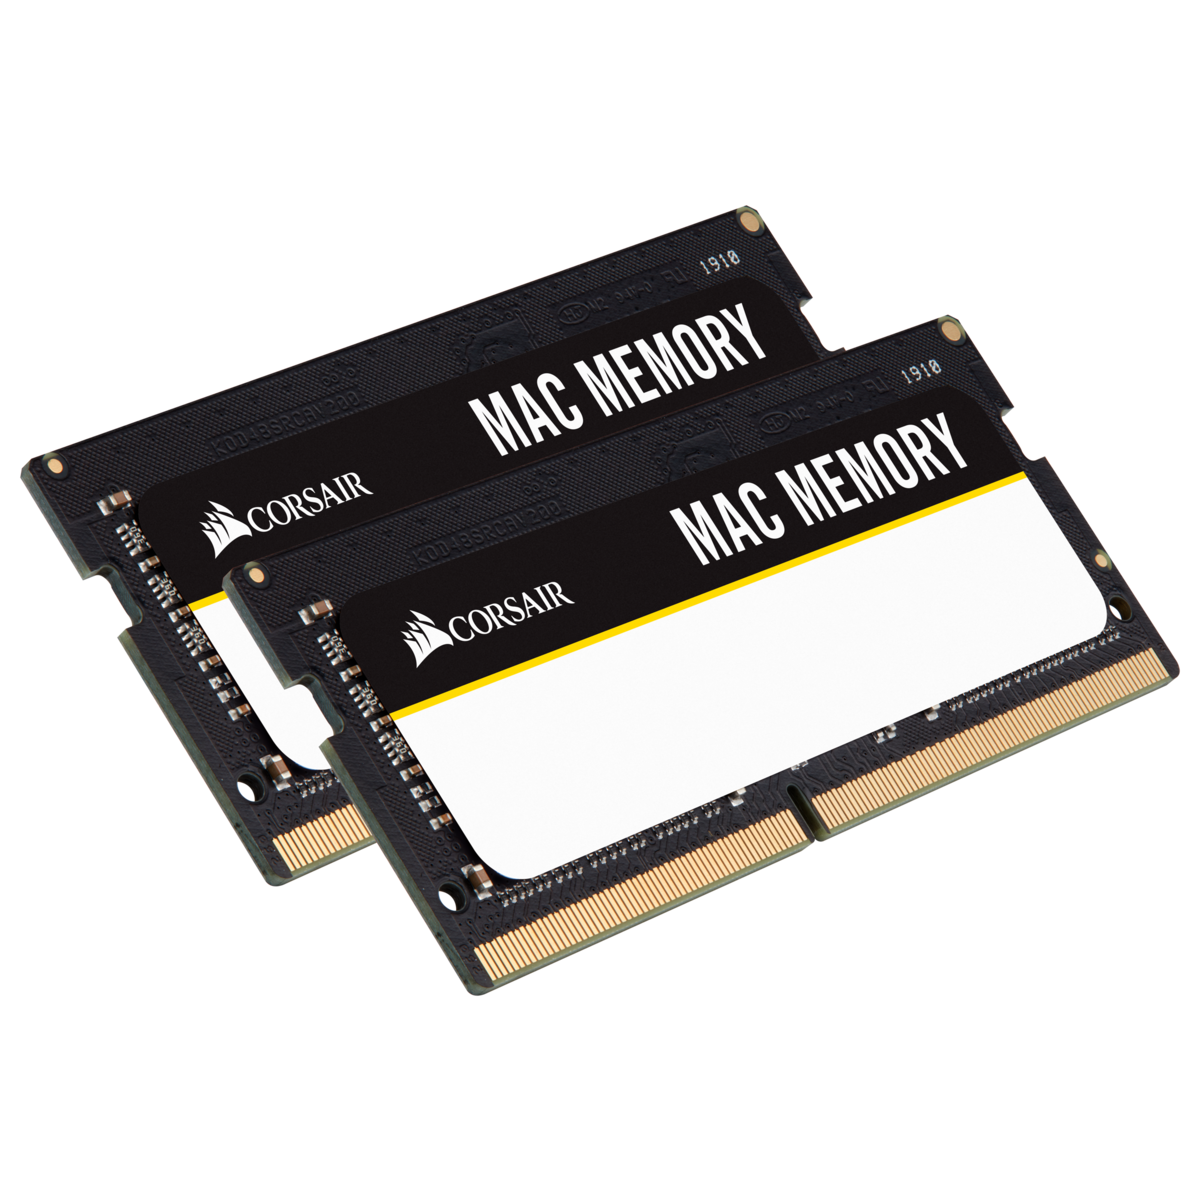 CORSAIR Mac Memory 32GB (2 x 16GB) DDR4 2666MHz C18 Memory Kit